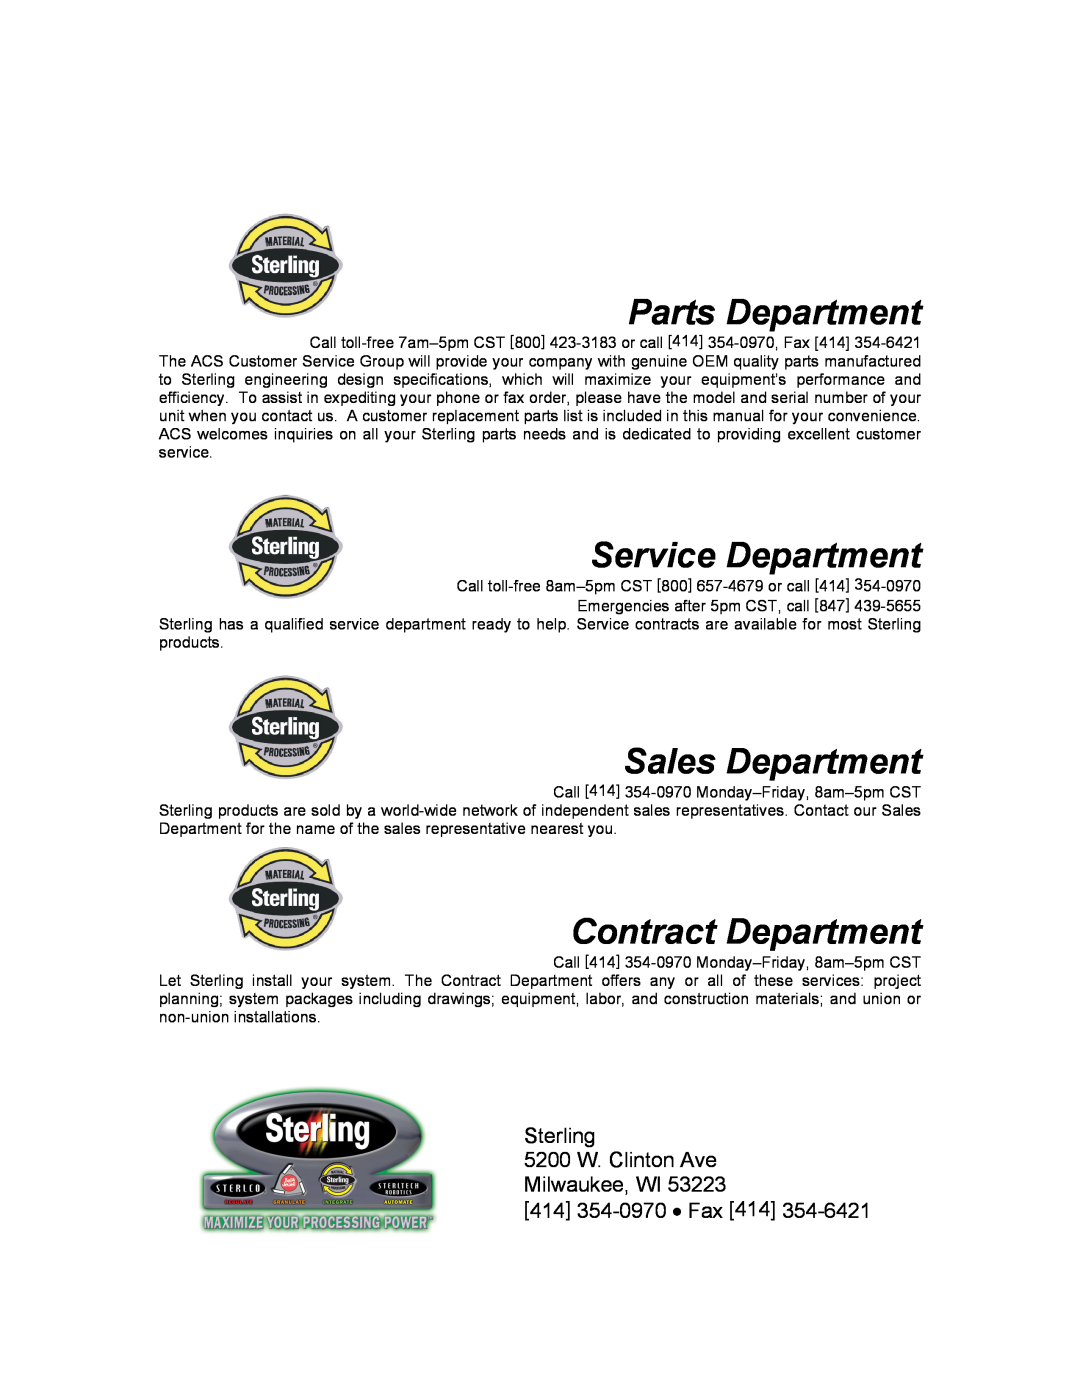 Sterling STT70, STT40 manual Parts Department, Service Department, Sales Department, Contract Department, 414 354-0970 Fax 